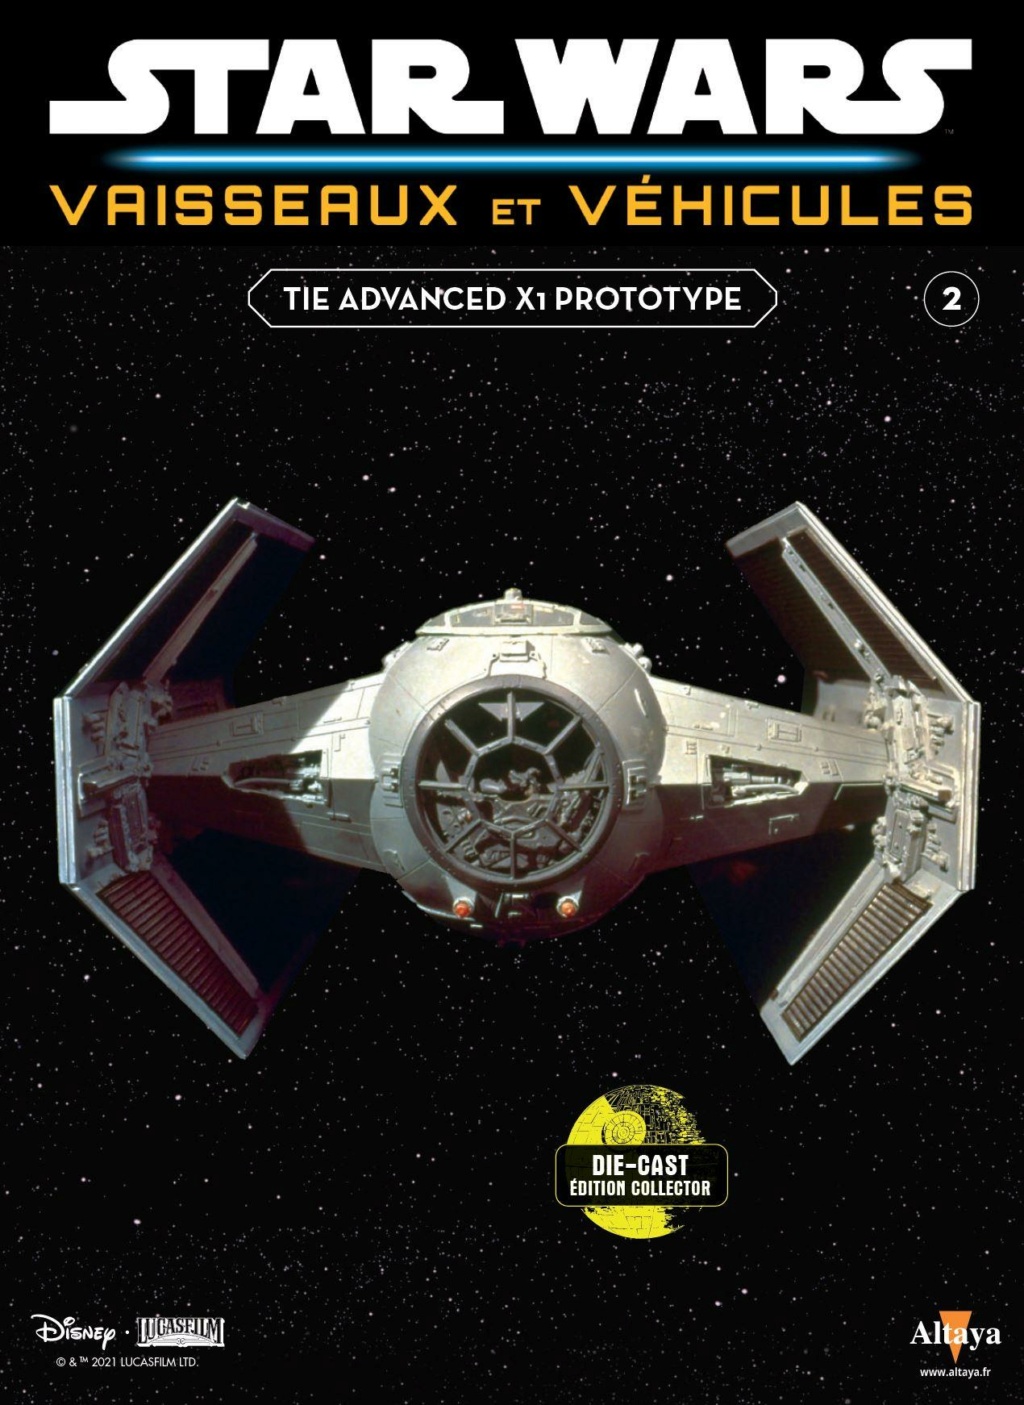 Collection Star Wars Vaisseaux et Véhicules - Altaya